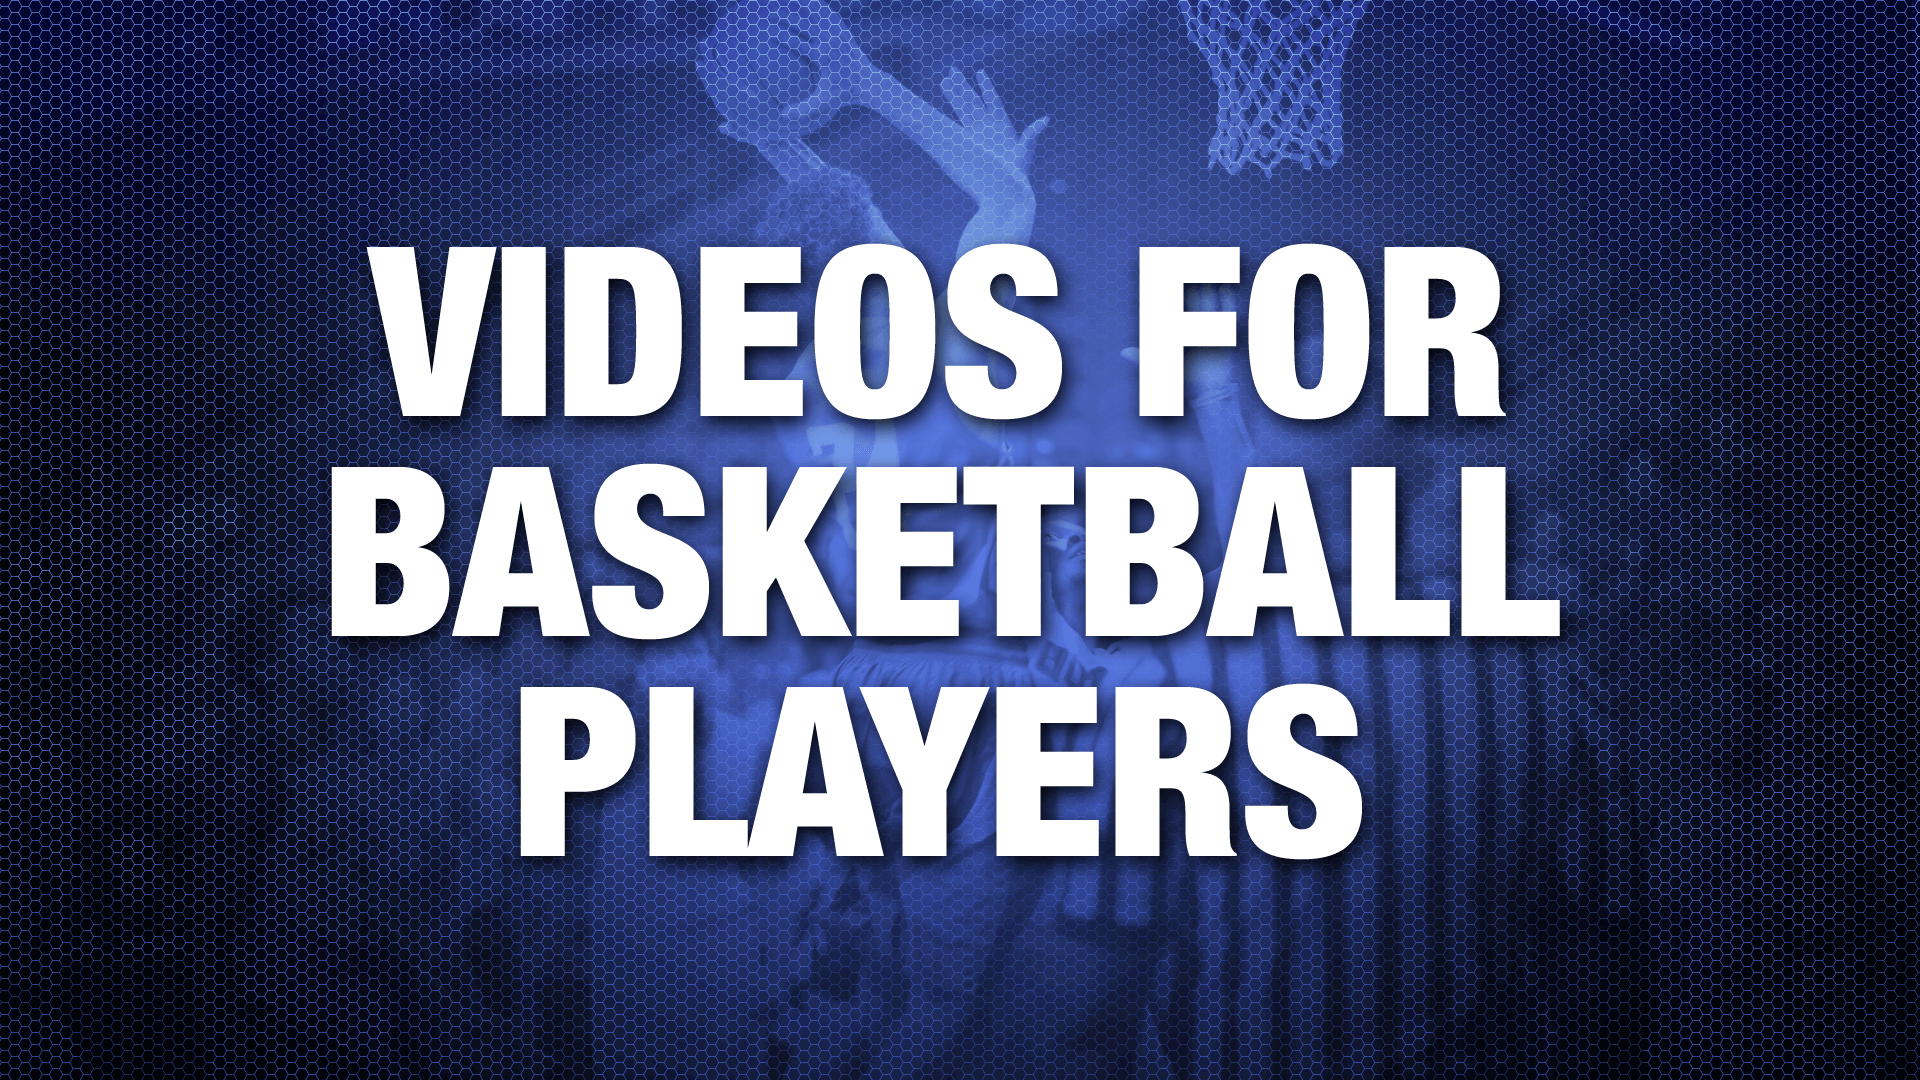 VideosForBasketballPlayers